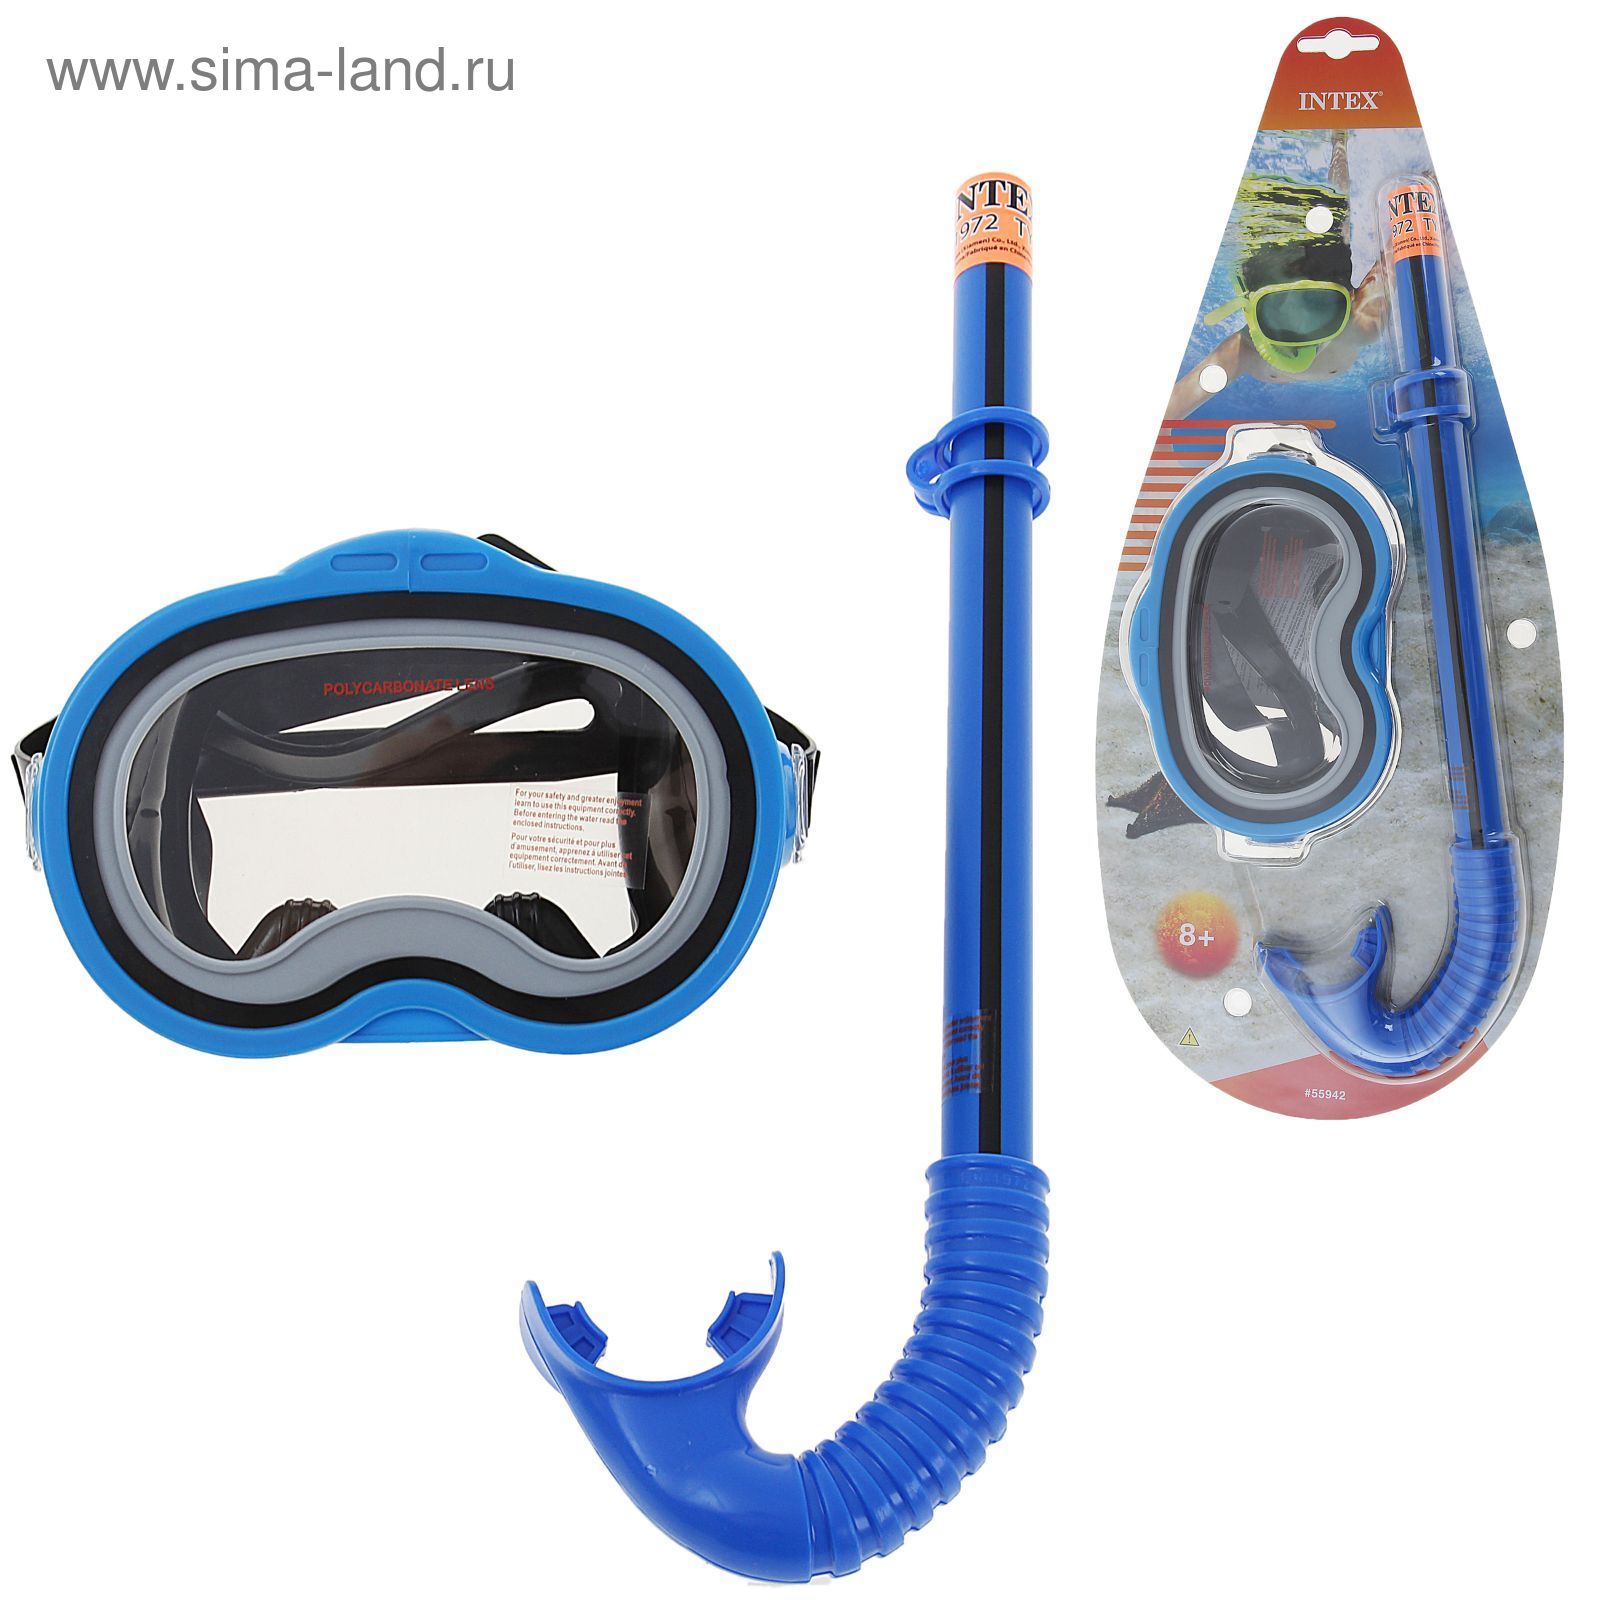 Набор для подводного плавания "Авантюрист", 2 предмета: маска, трубка, от 8 до 10 лет INTEX